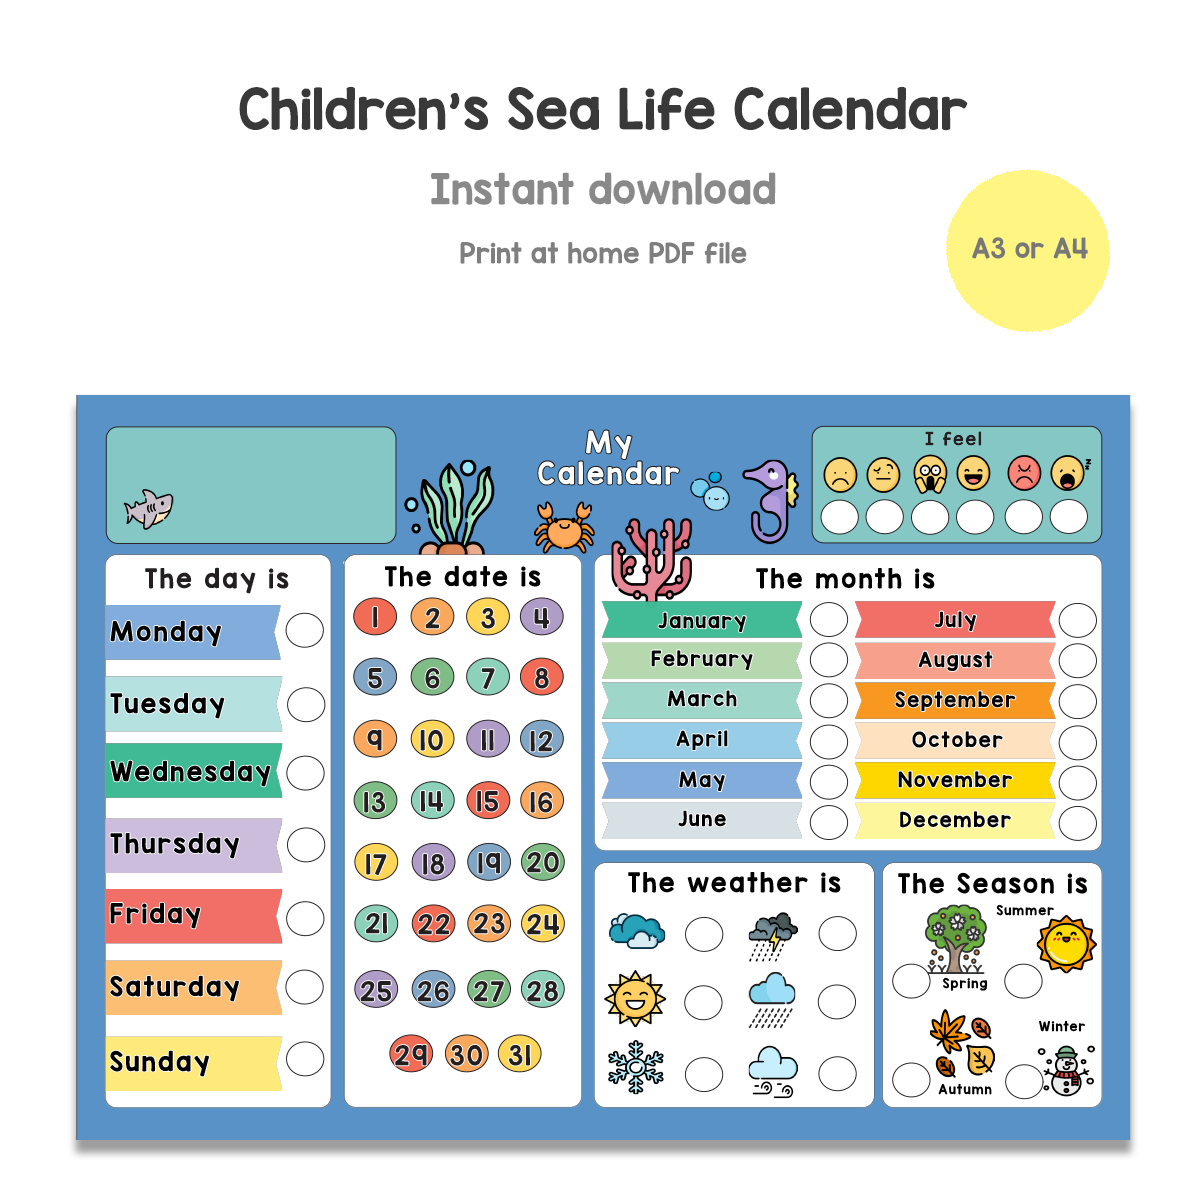 PRINTABLE Children's Sea Life Calendar